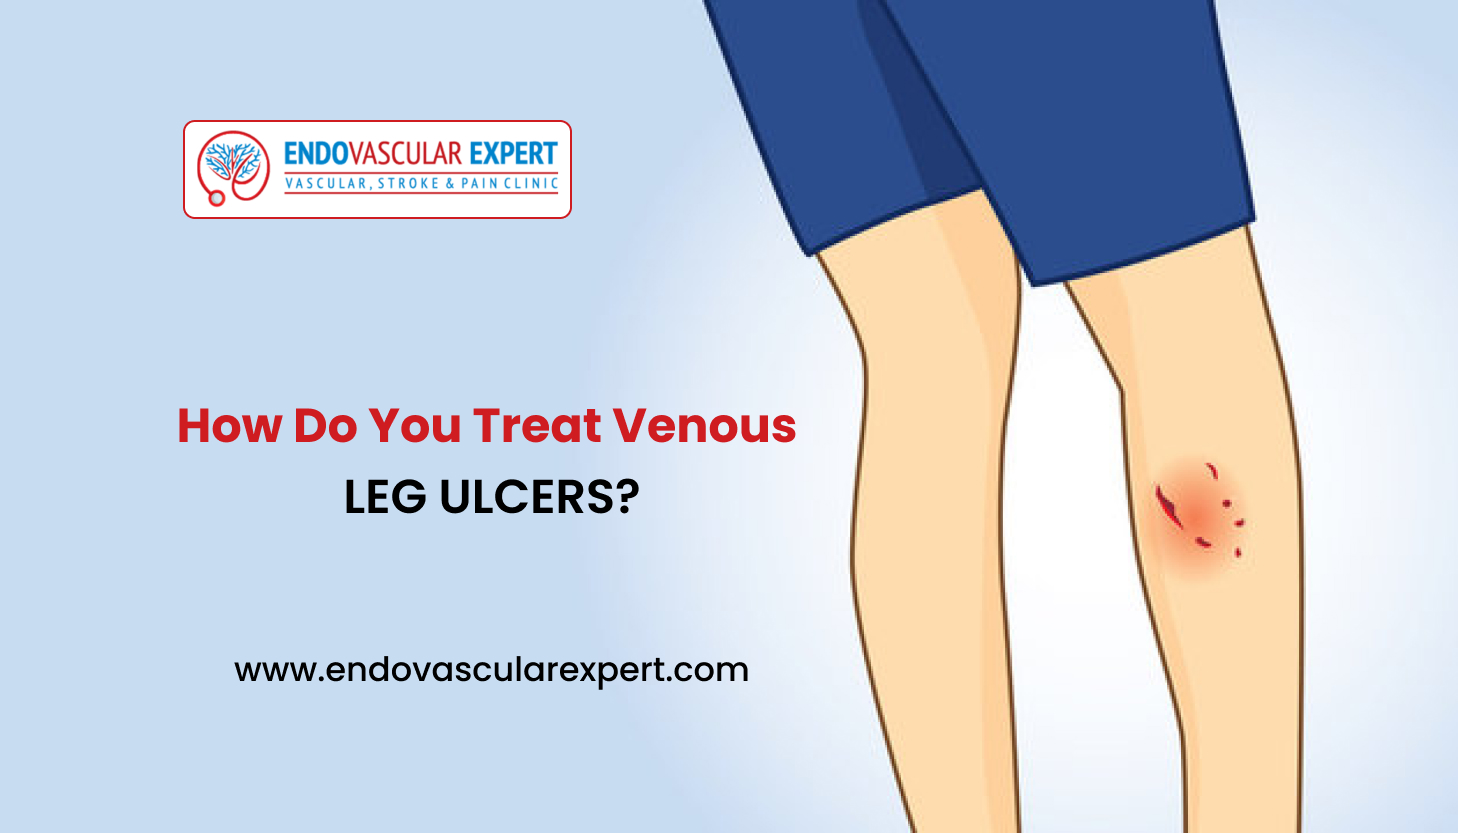 How Do You Treat Venous Leg Ulcers